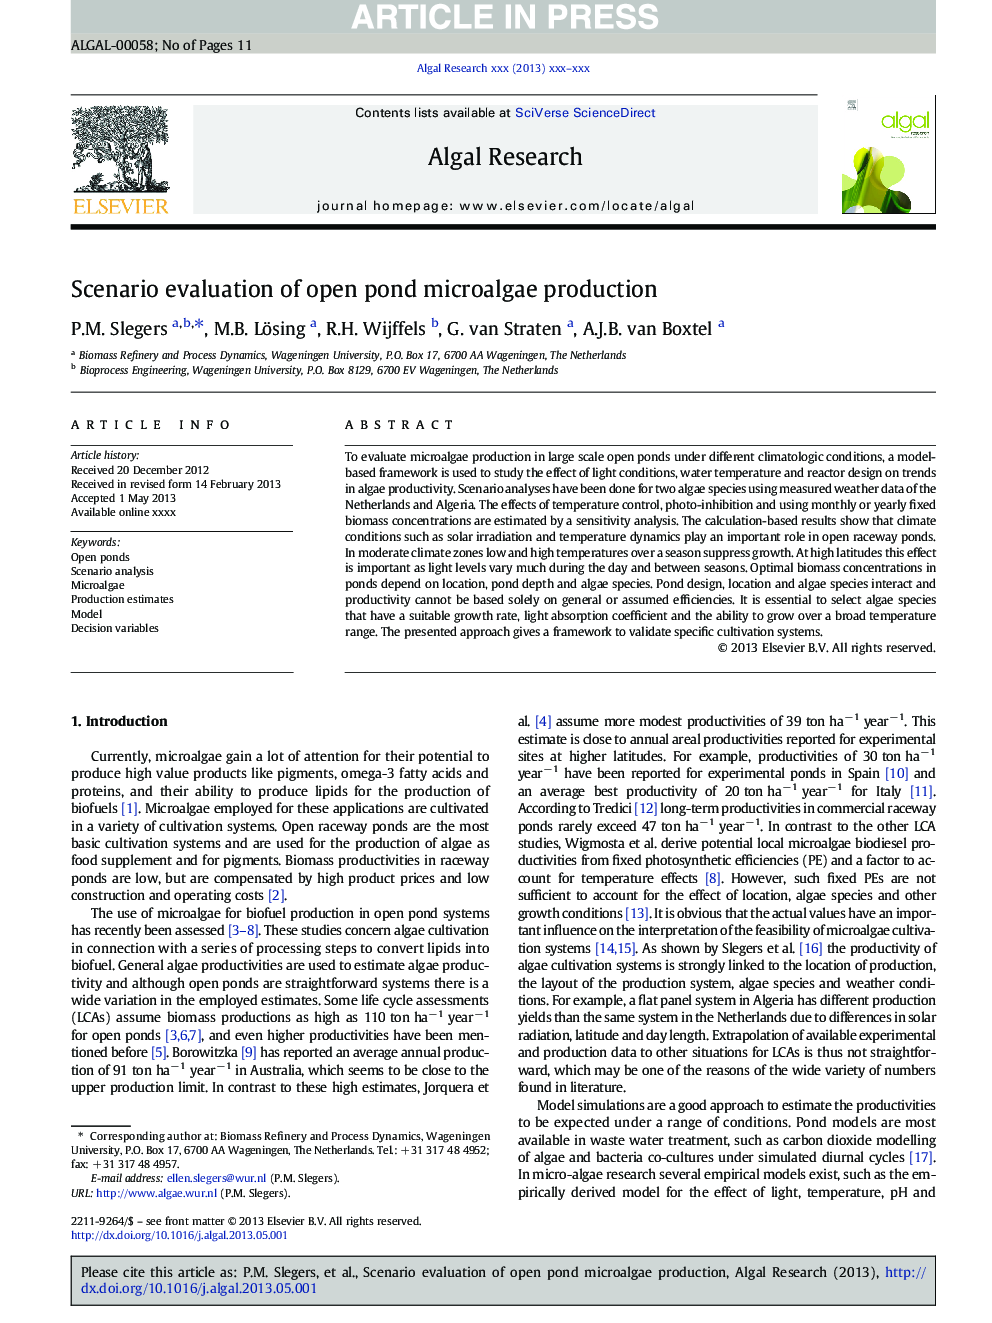 Scenario evaluation of open pond microalgae production